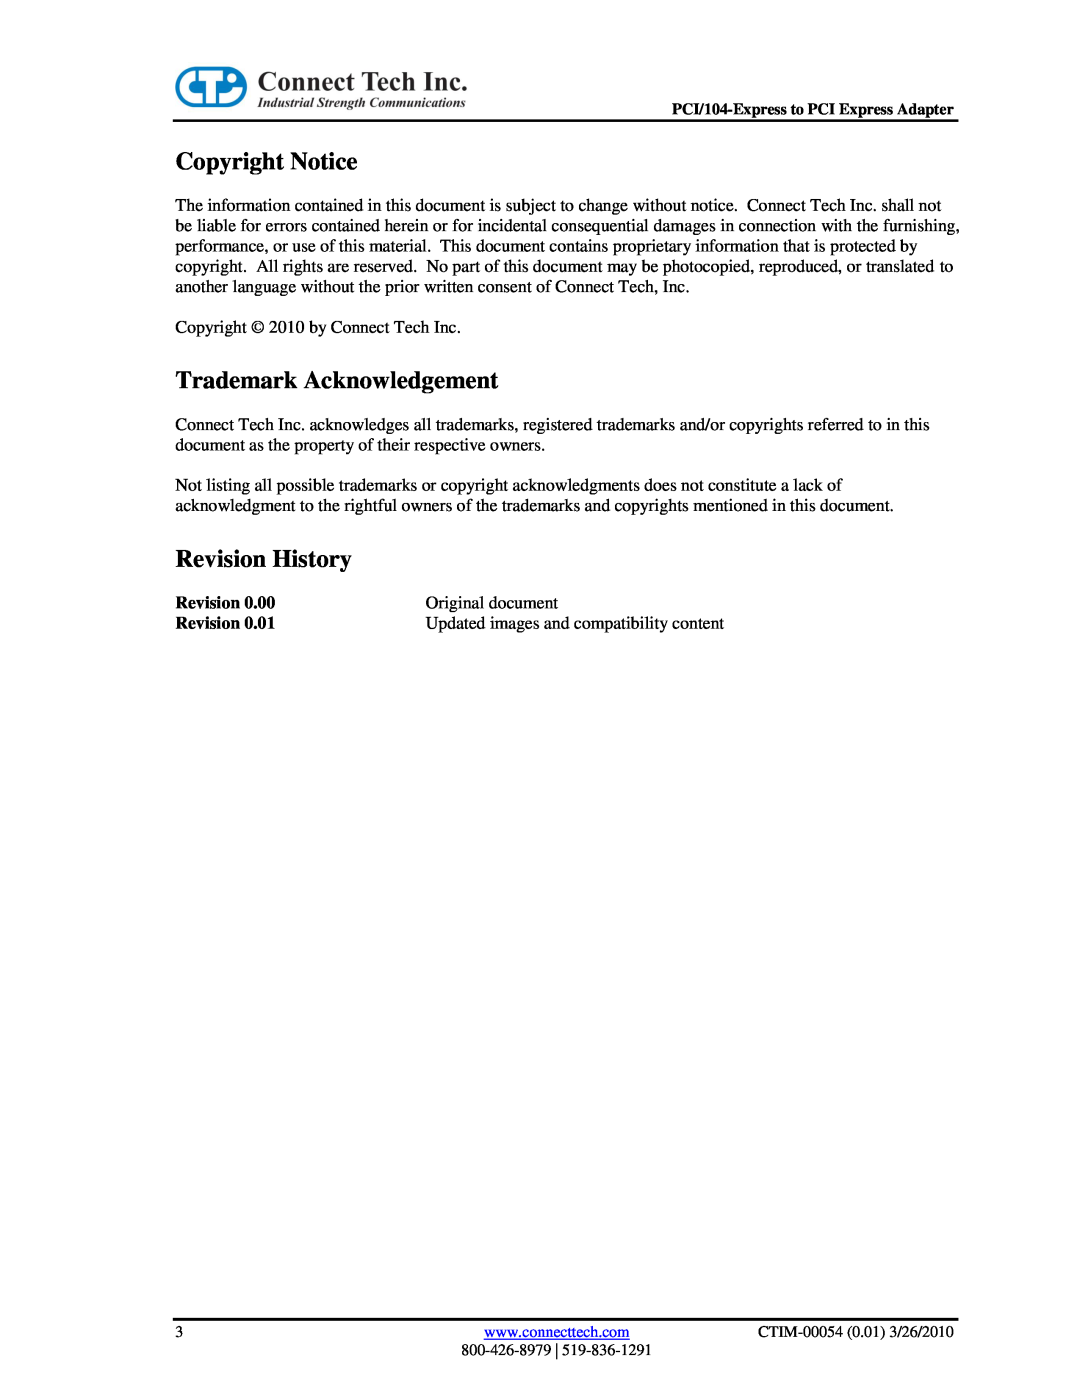 Connect Tech CTIM-00054 user manual Copyright Notice, Trademark Acknowledgement, Revision History, Original document 